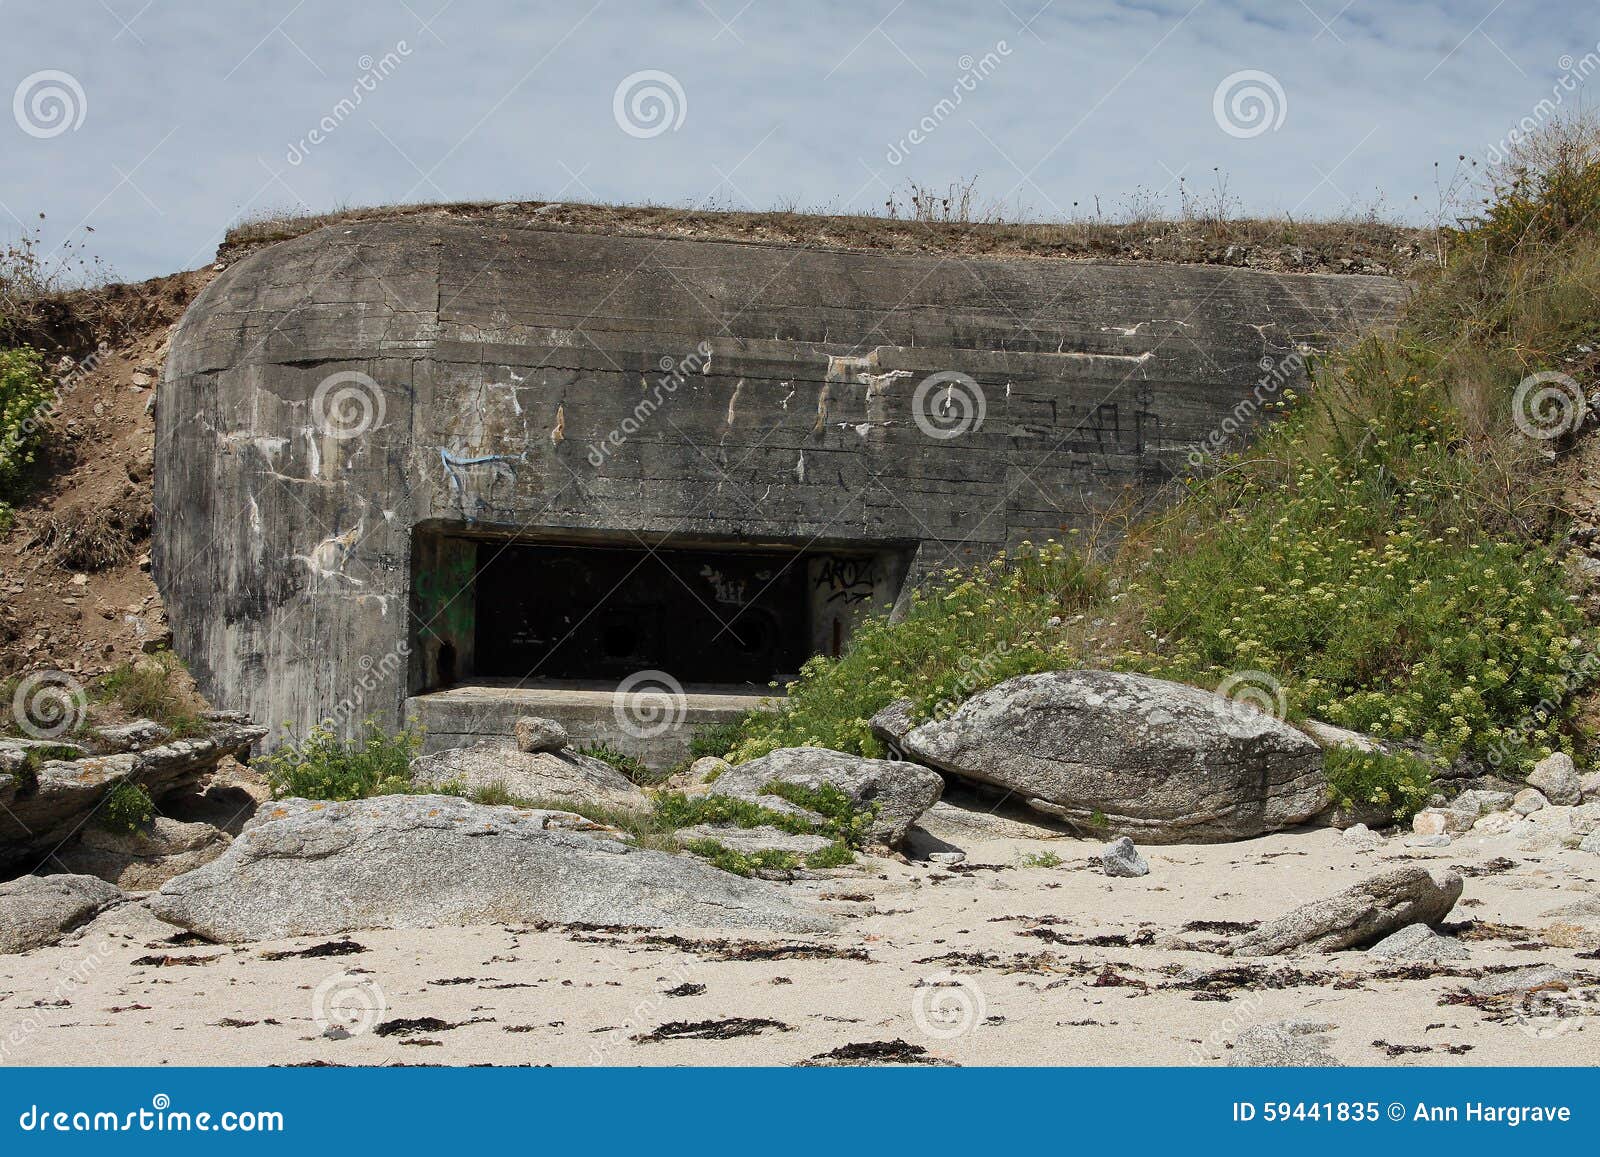 wartime german bunker